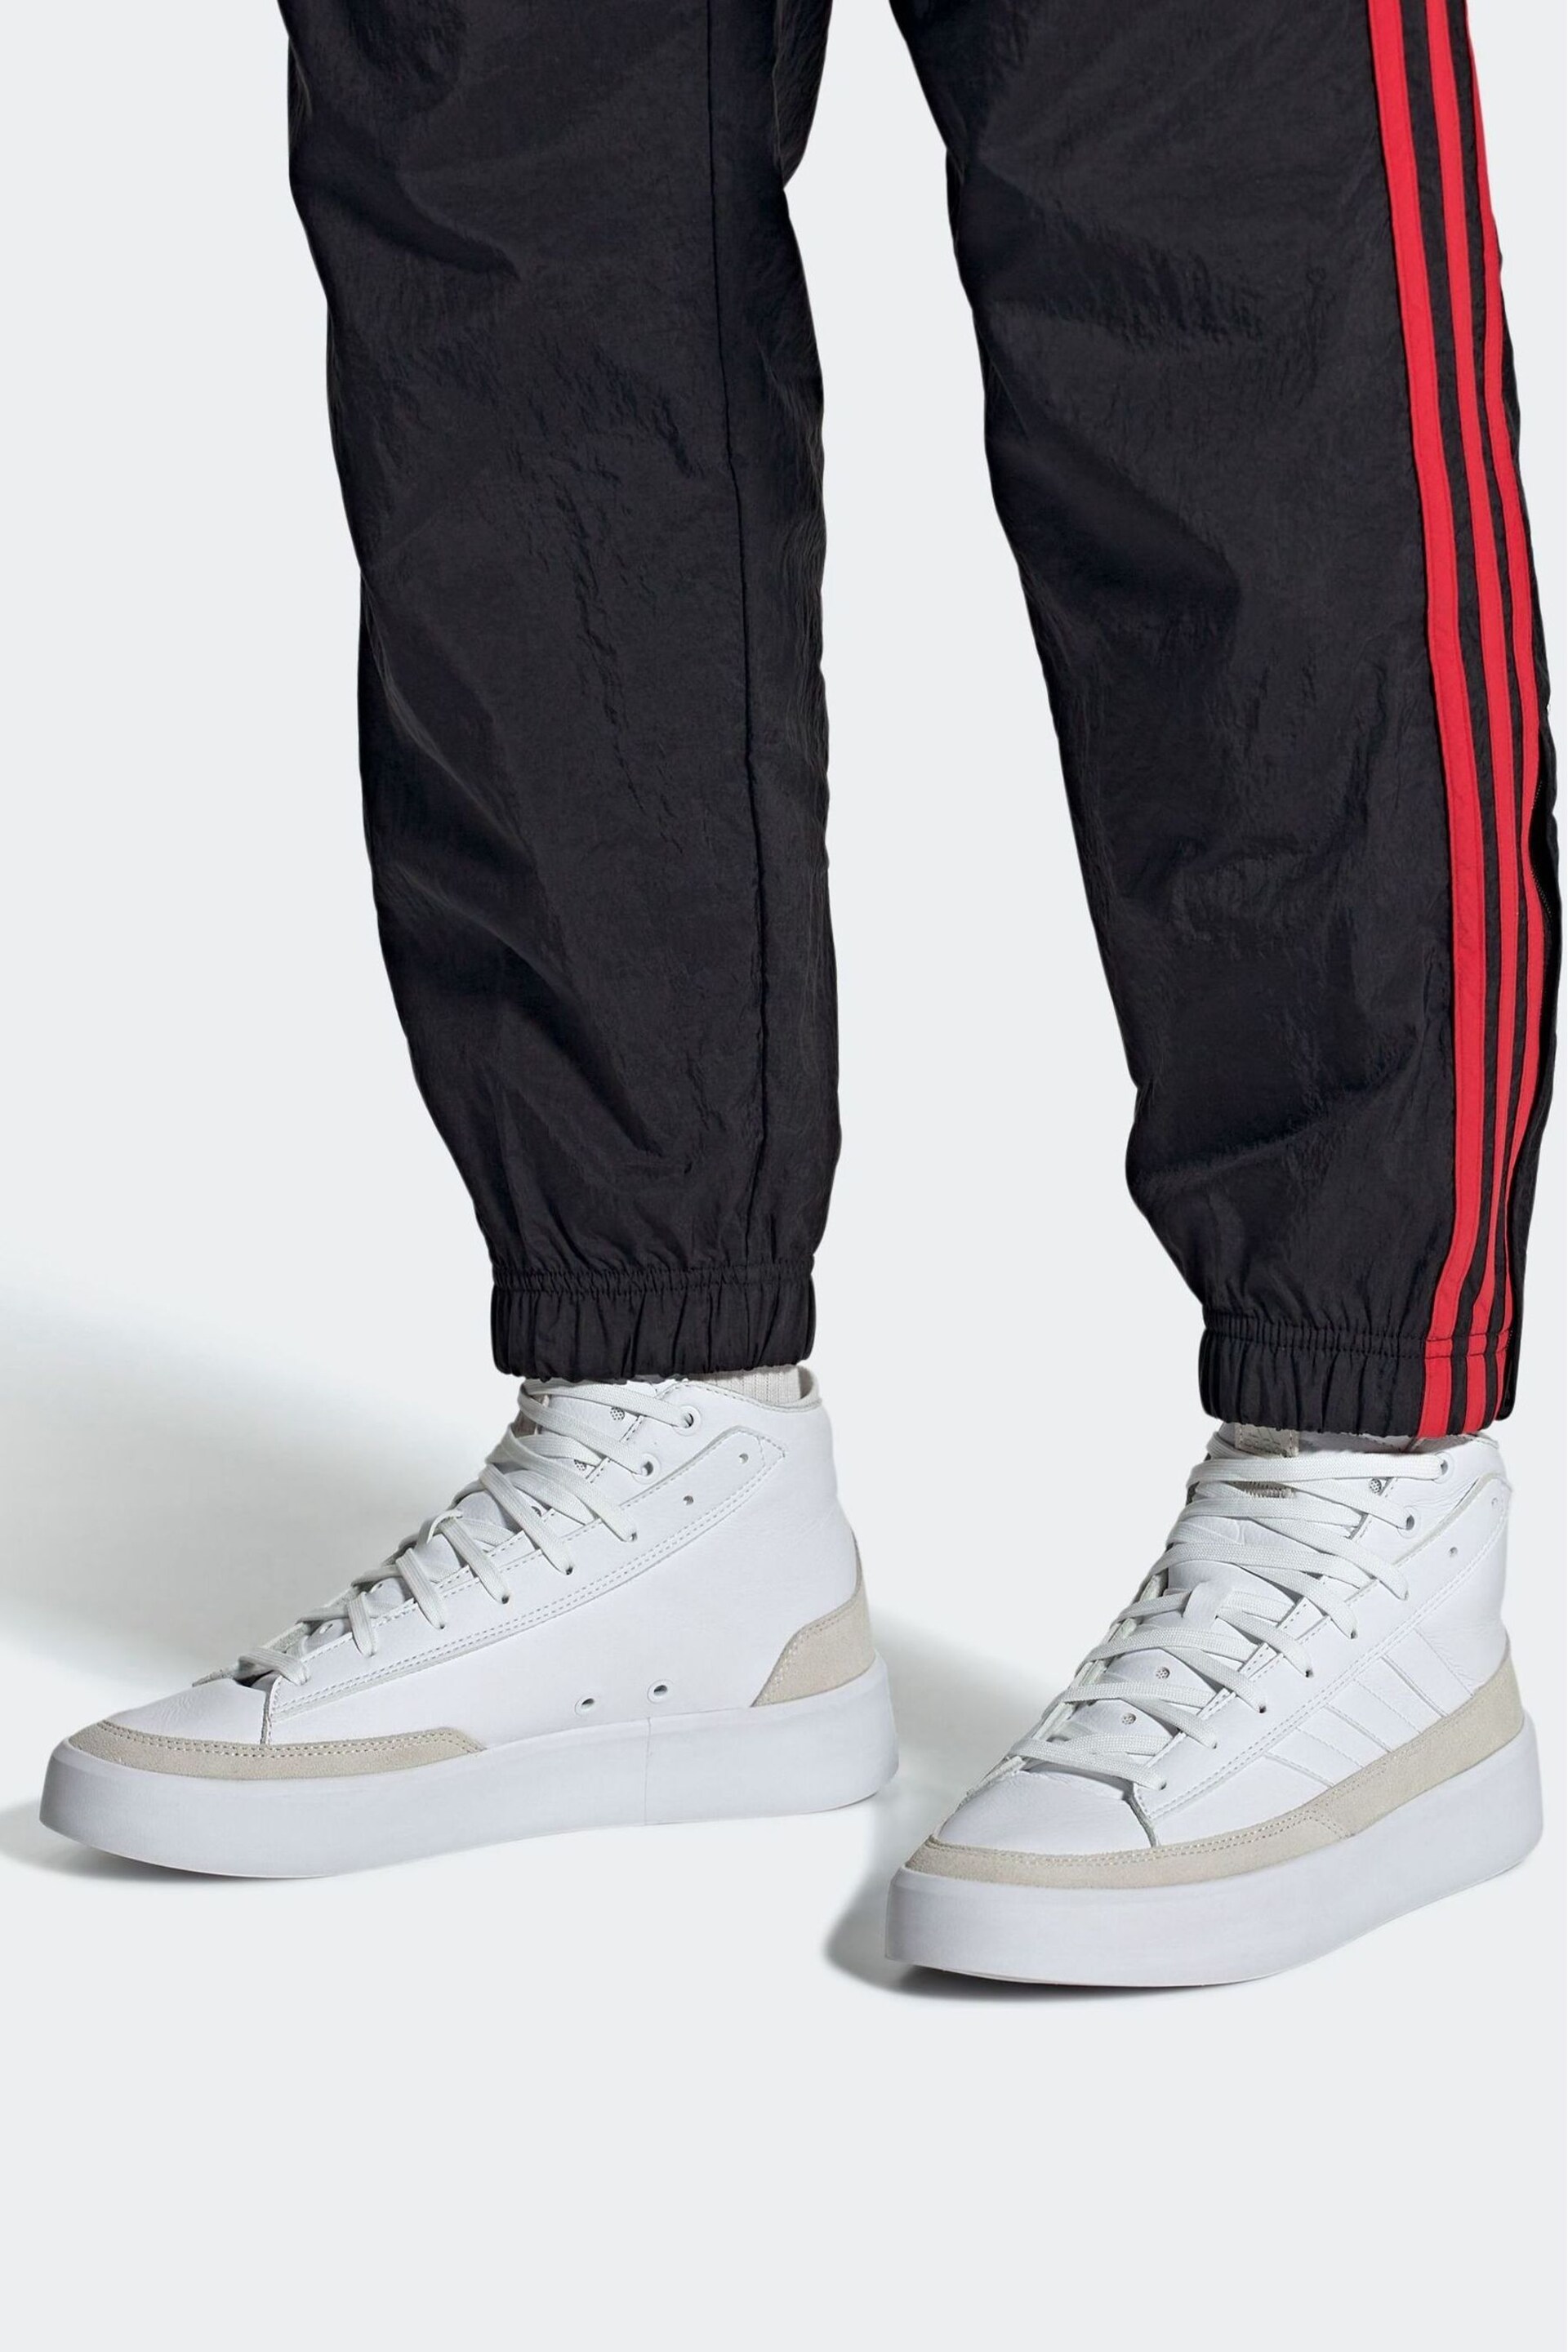 adidas White Znsored HI Prem Leather Trainers - Image 12 of 12